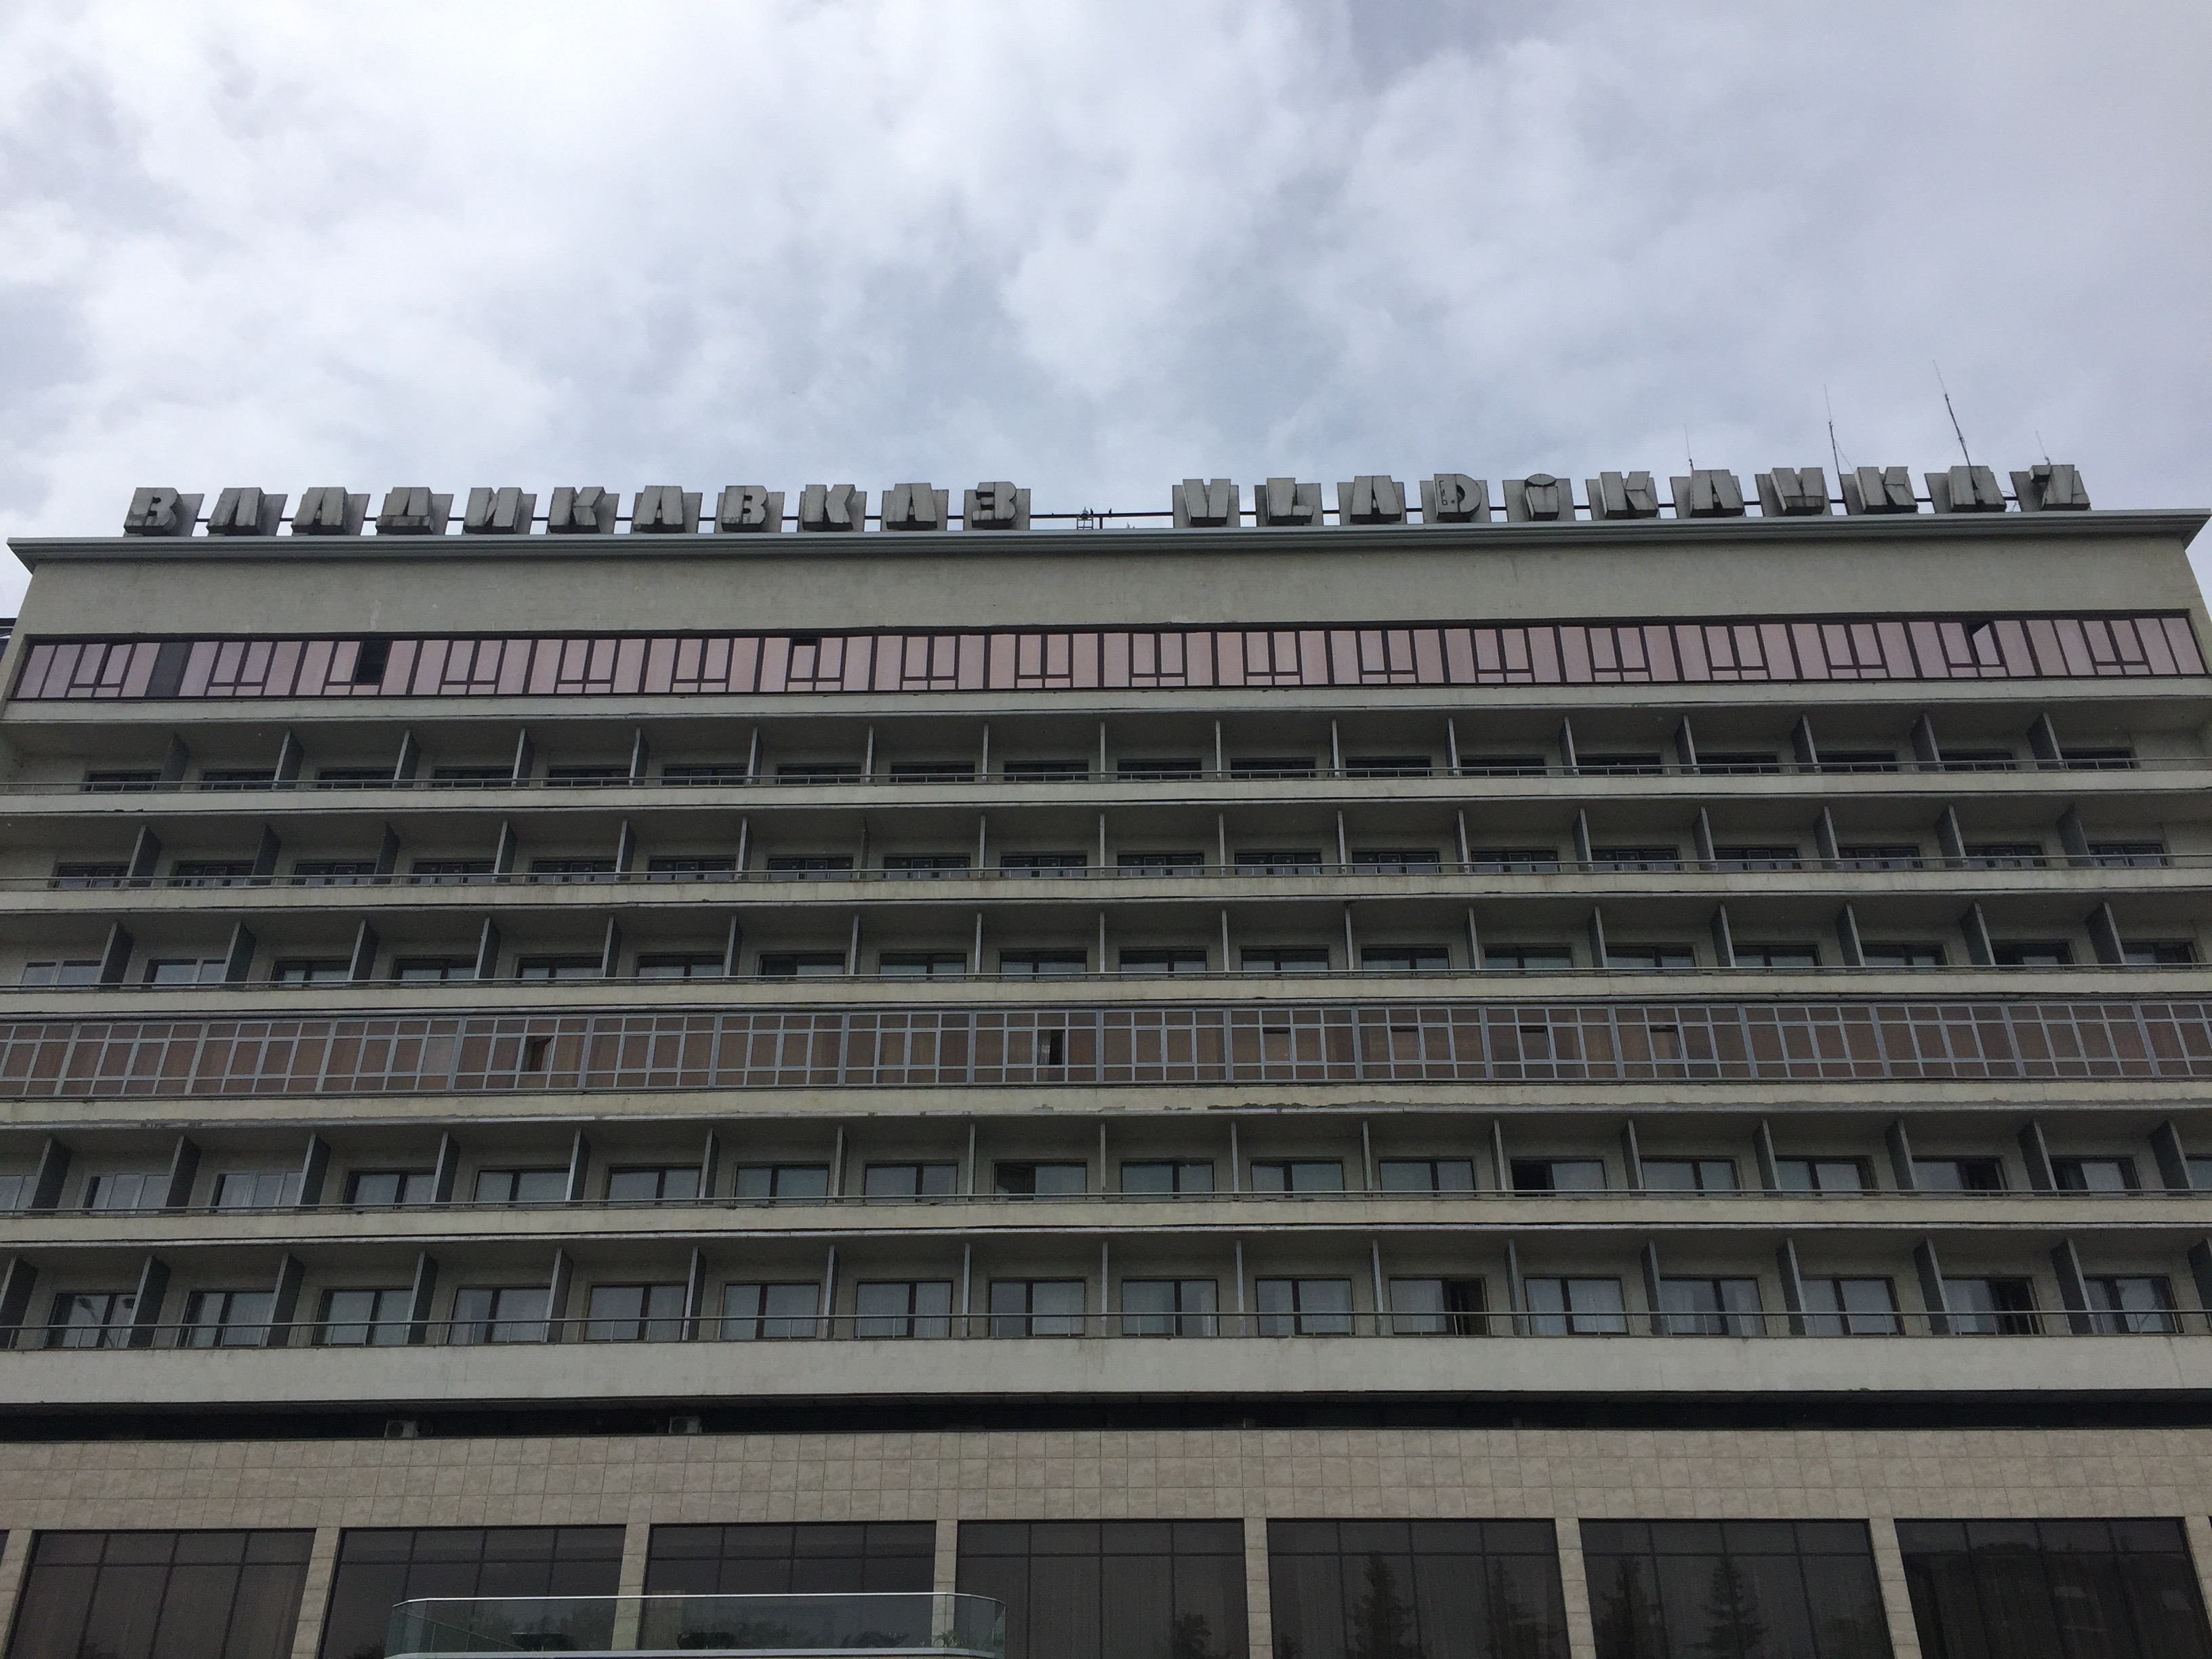 Soviet brutal hotel